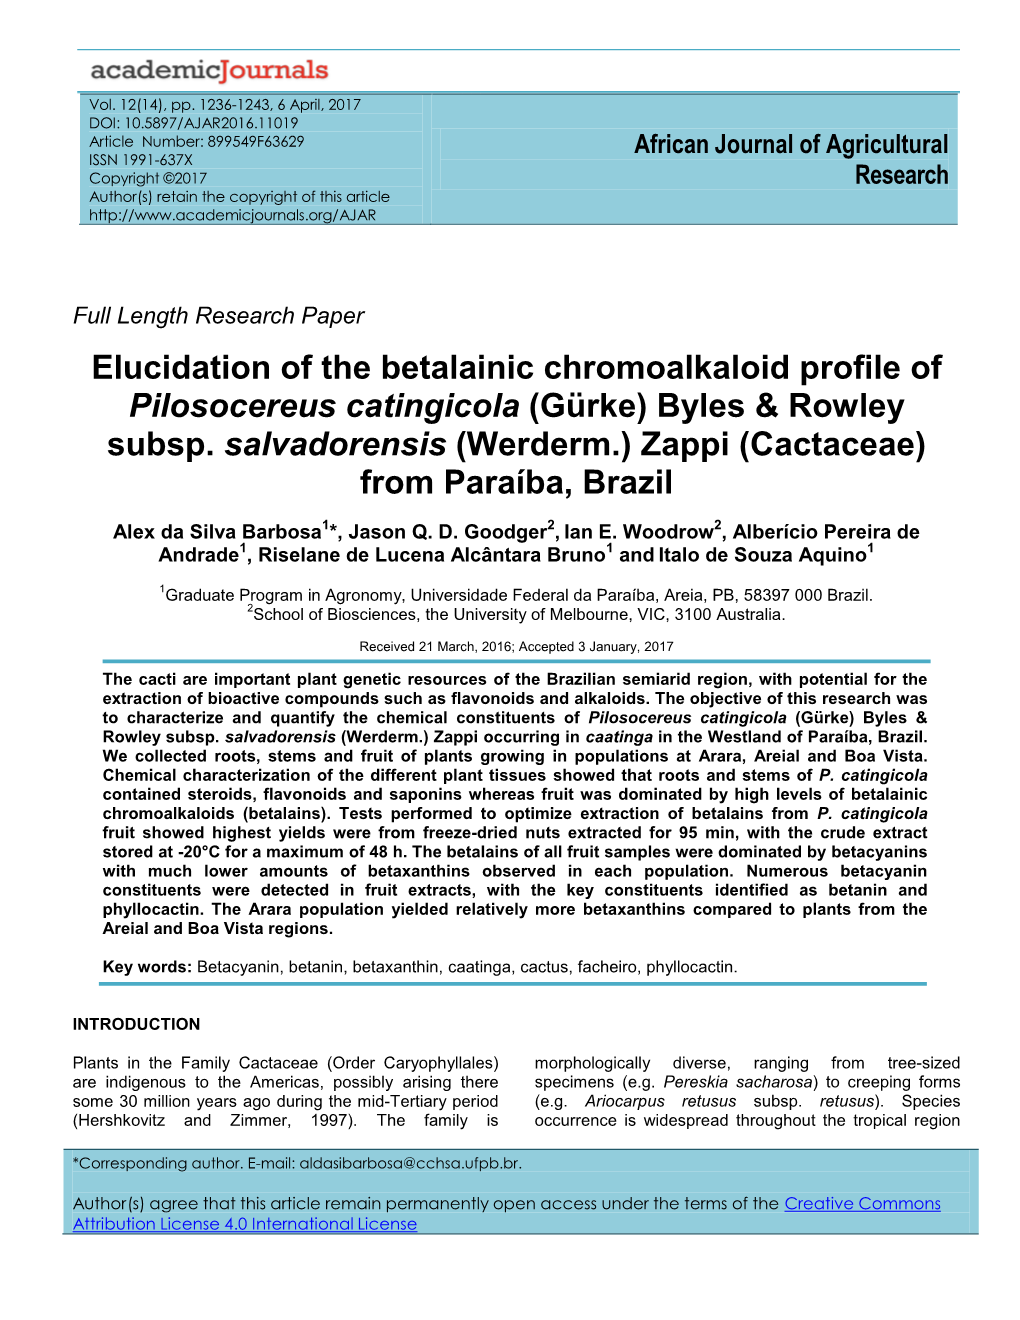 Elucidation of the Betalainic Chromoalkaloid Profile of Pilosocereus Catingicola (Gürke) Byles & Rowley Subsp. Salvadorensi